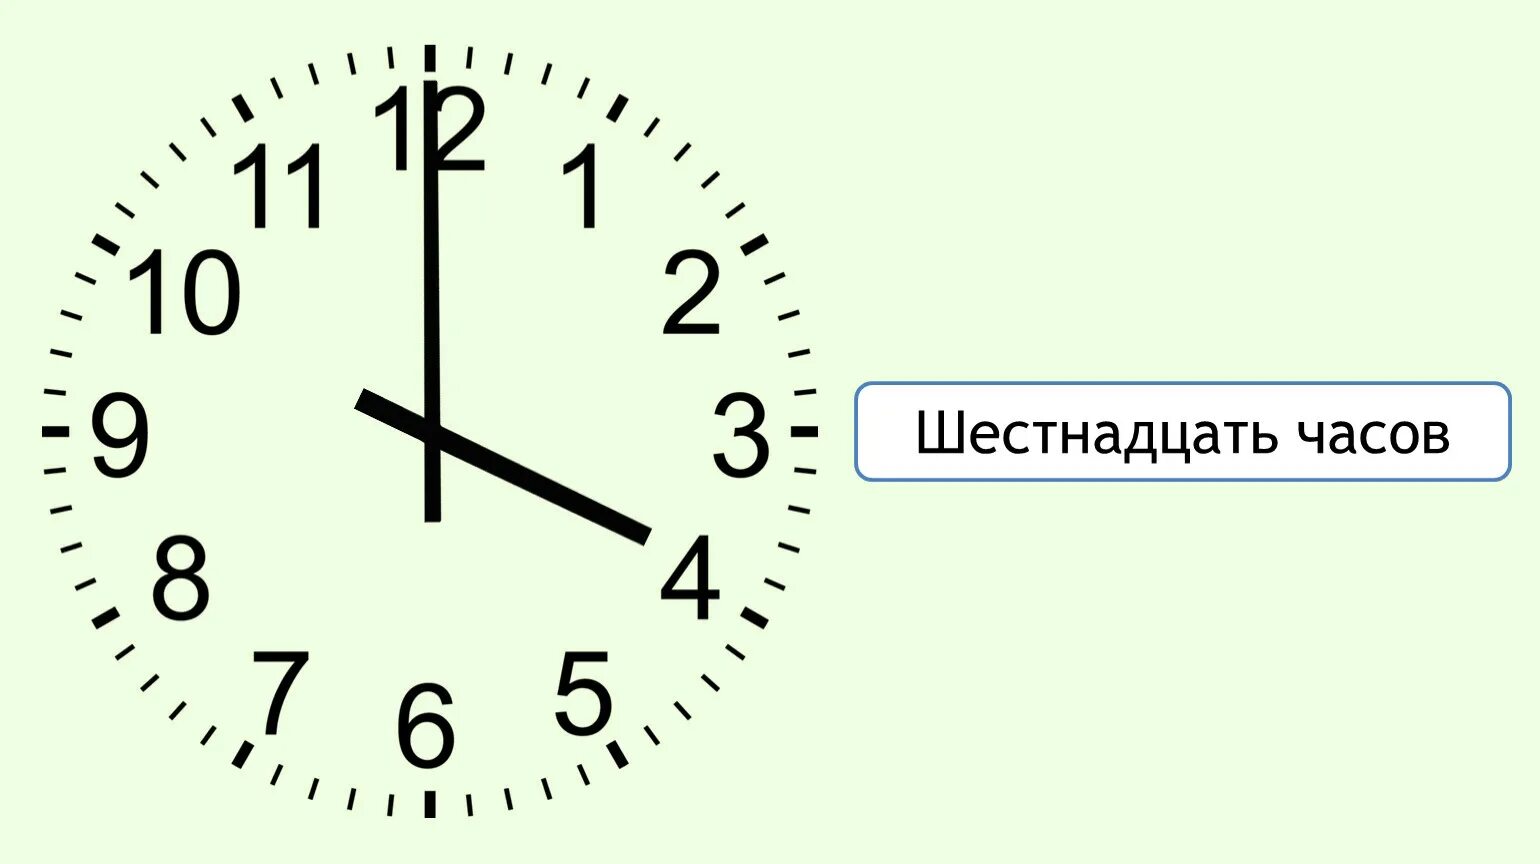 Часы 16:00. Циферблат на 16 часов. Часы показывают 4 часа. 16 Часов на часах. Время 14 39